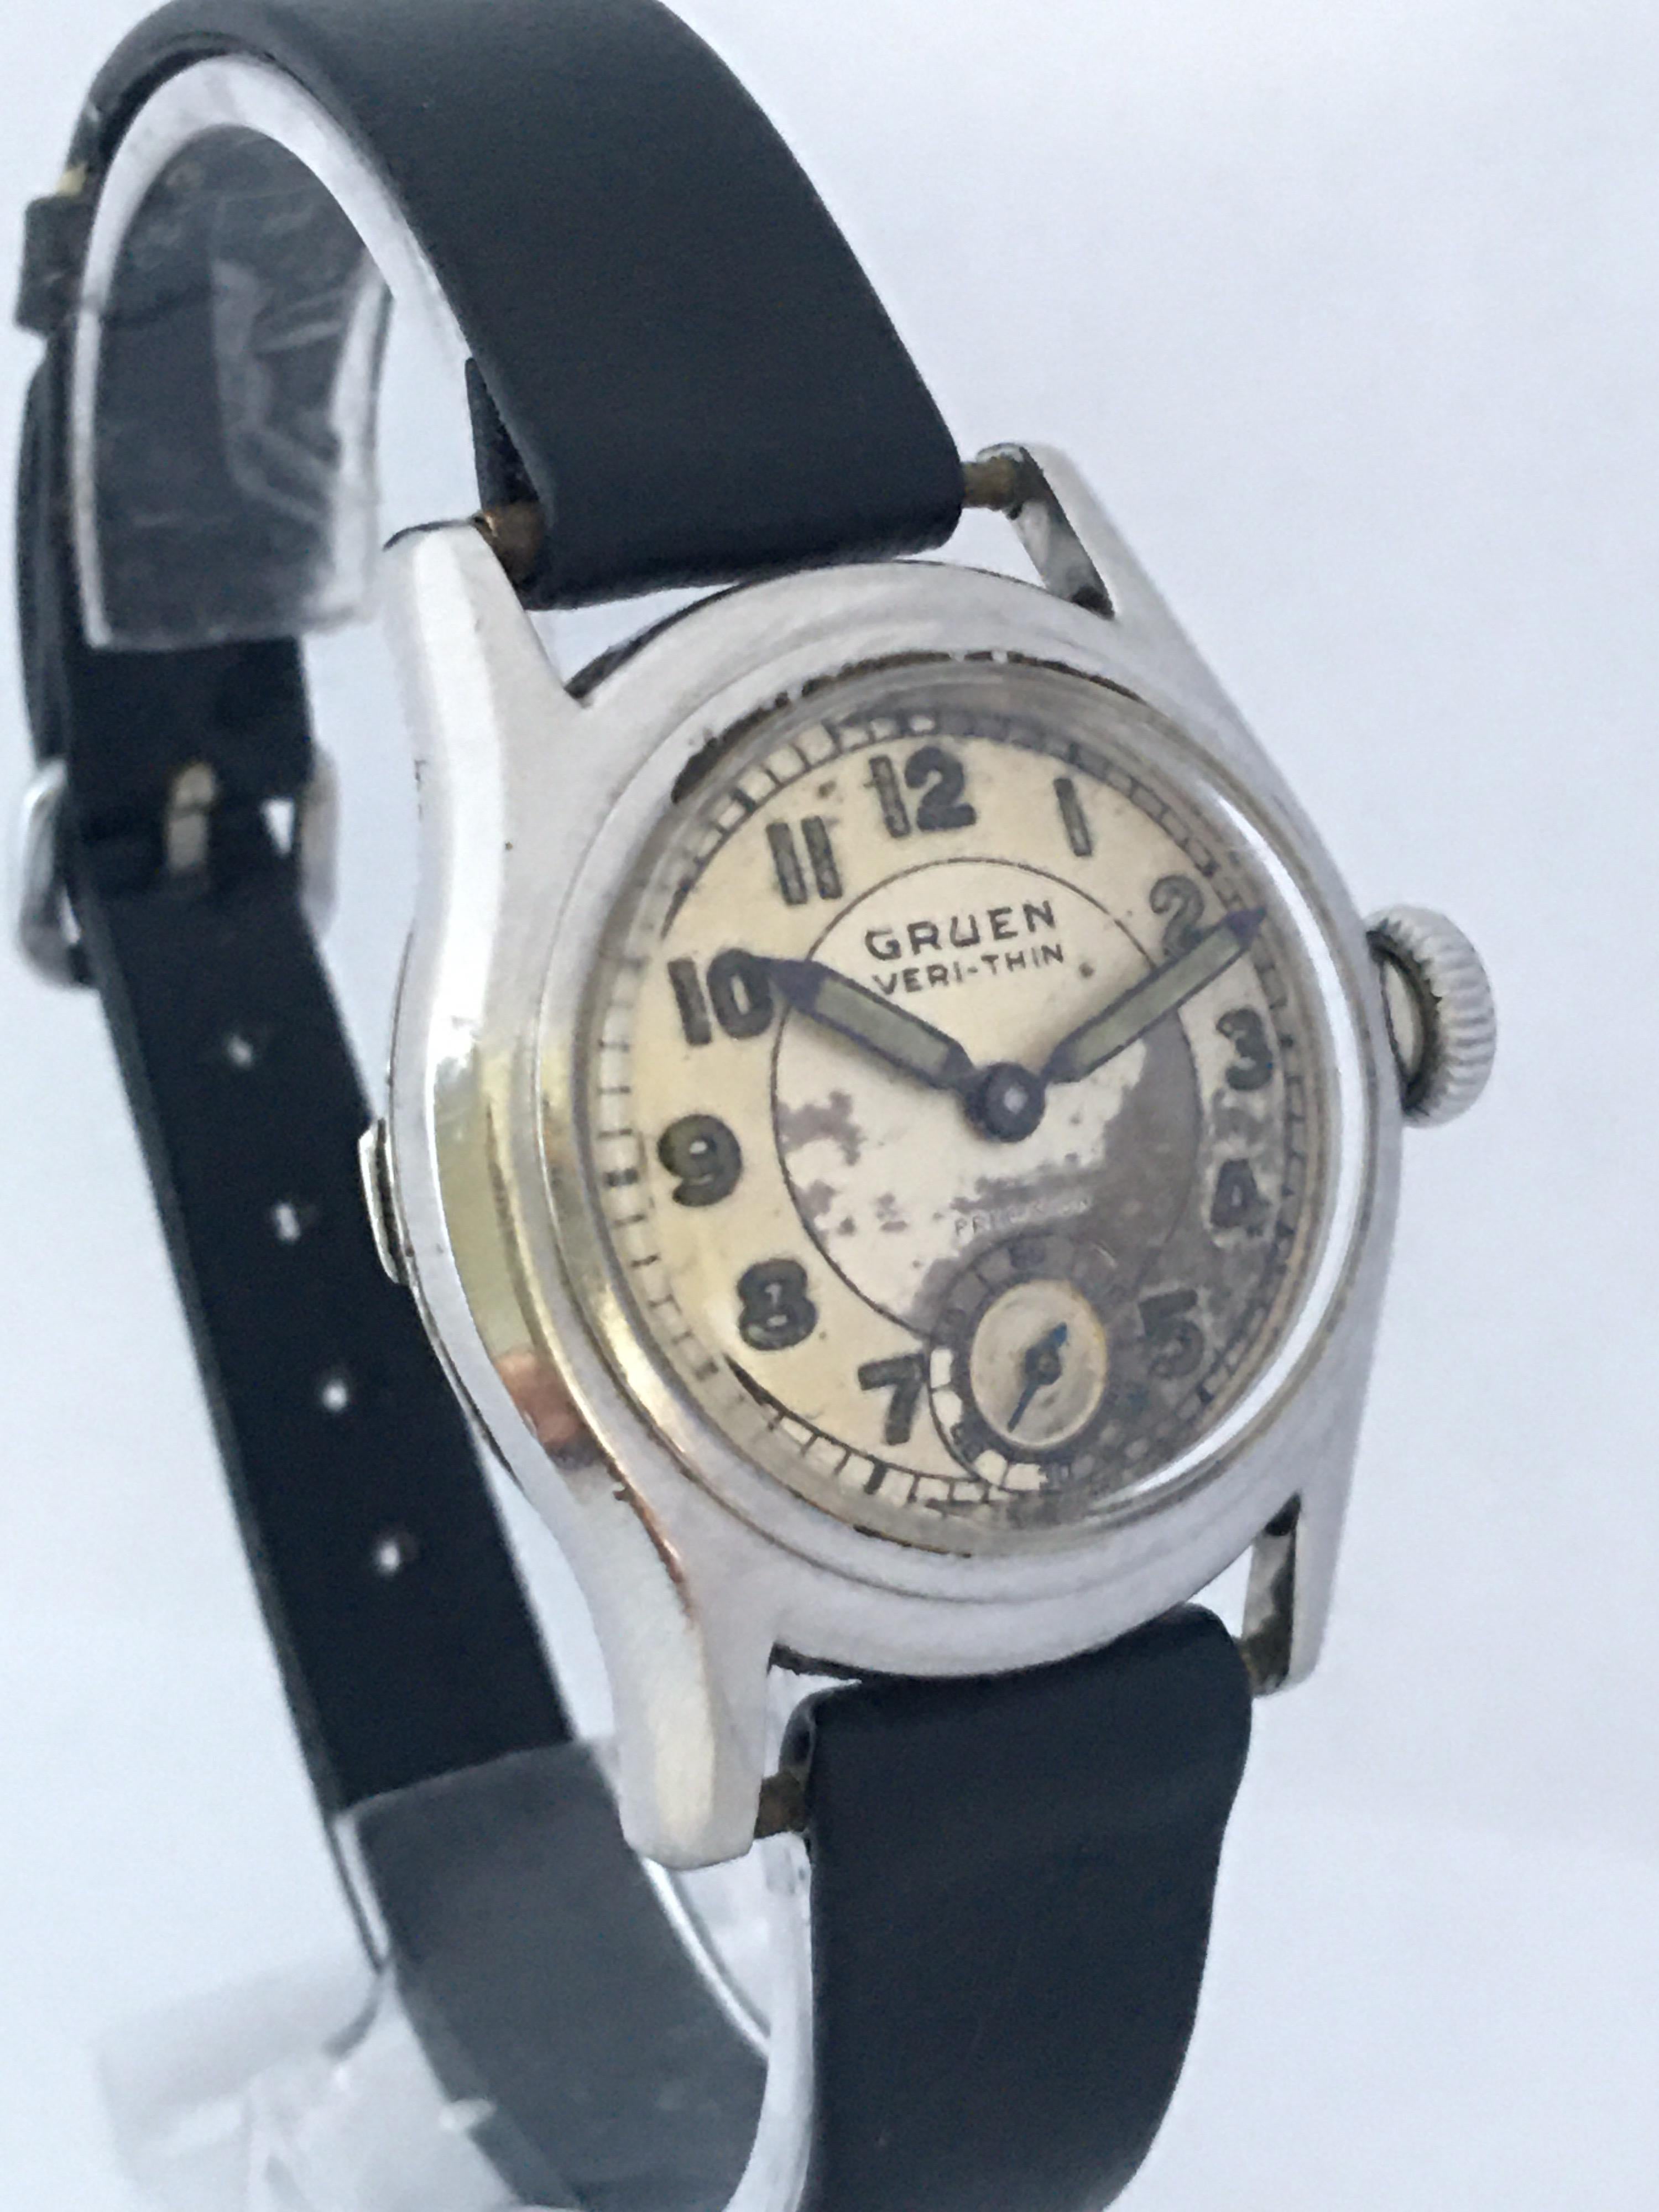 Vintage 1950s Stainless Steel Gruen Veri-Thin Precision Mechanical Watch 3